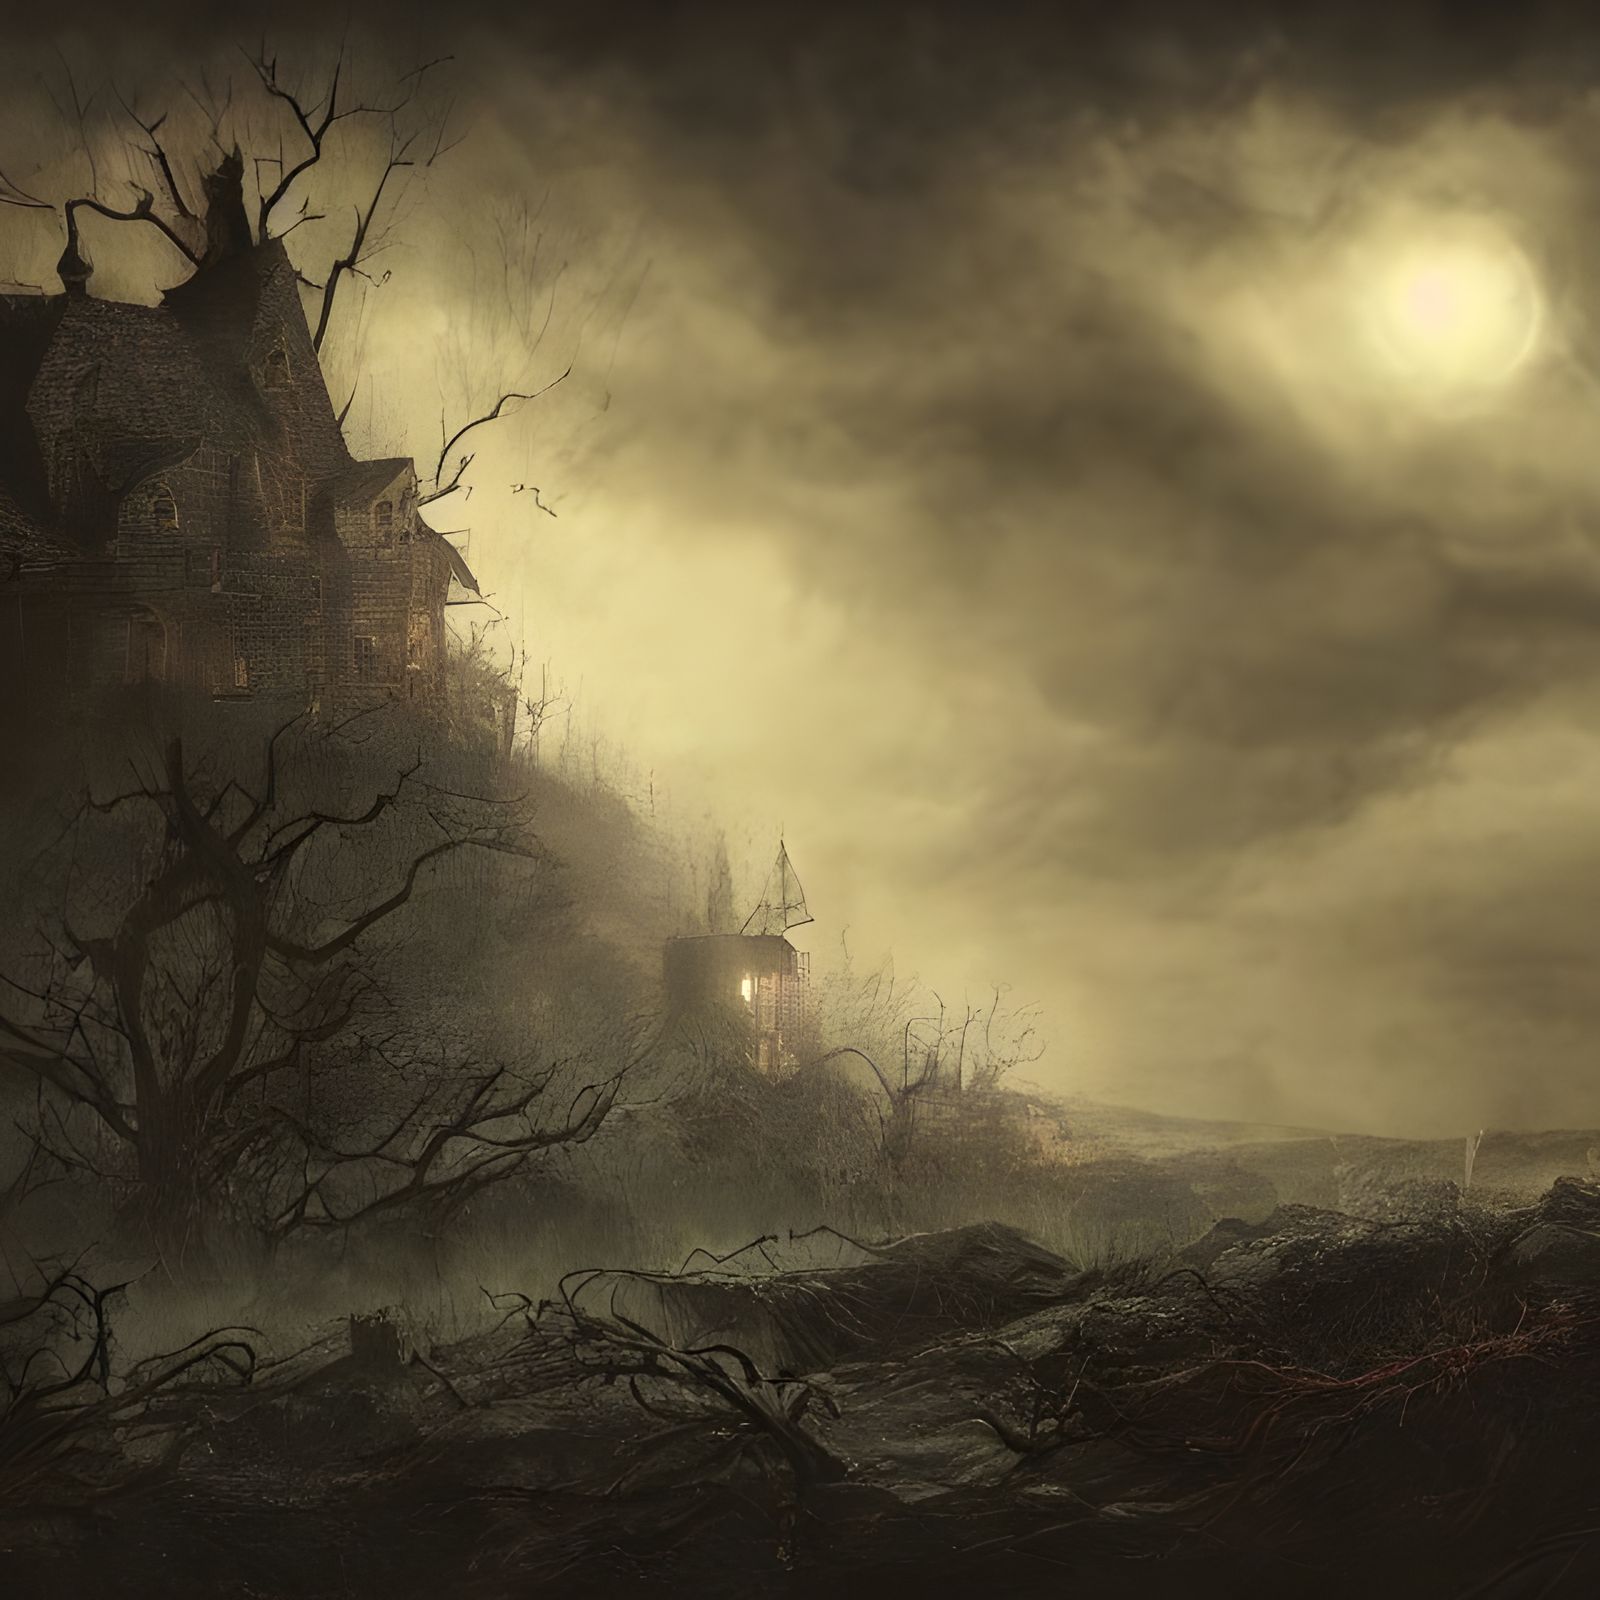 Dark Magical Fantasy Landscape